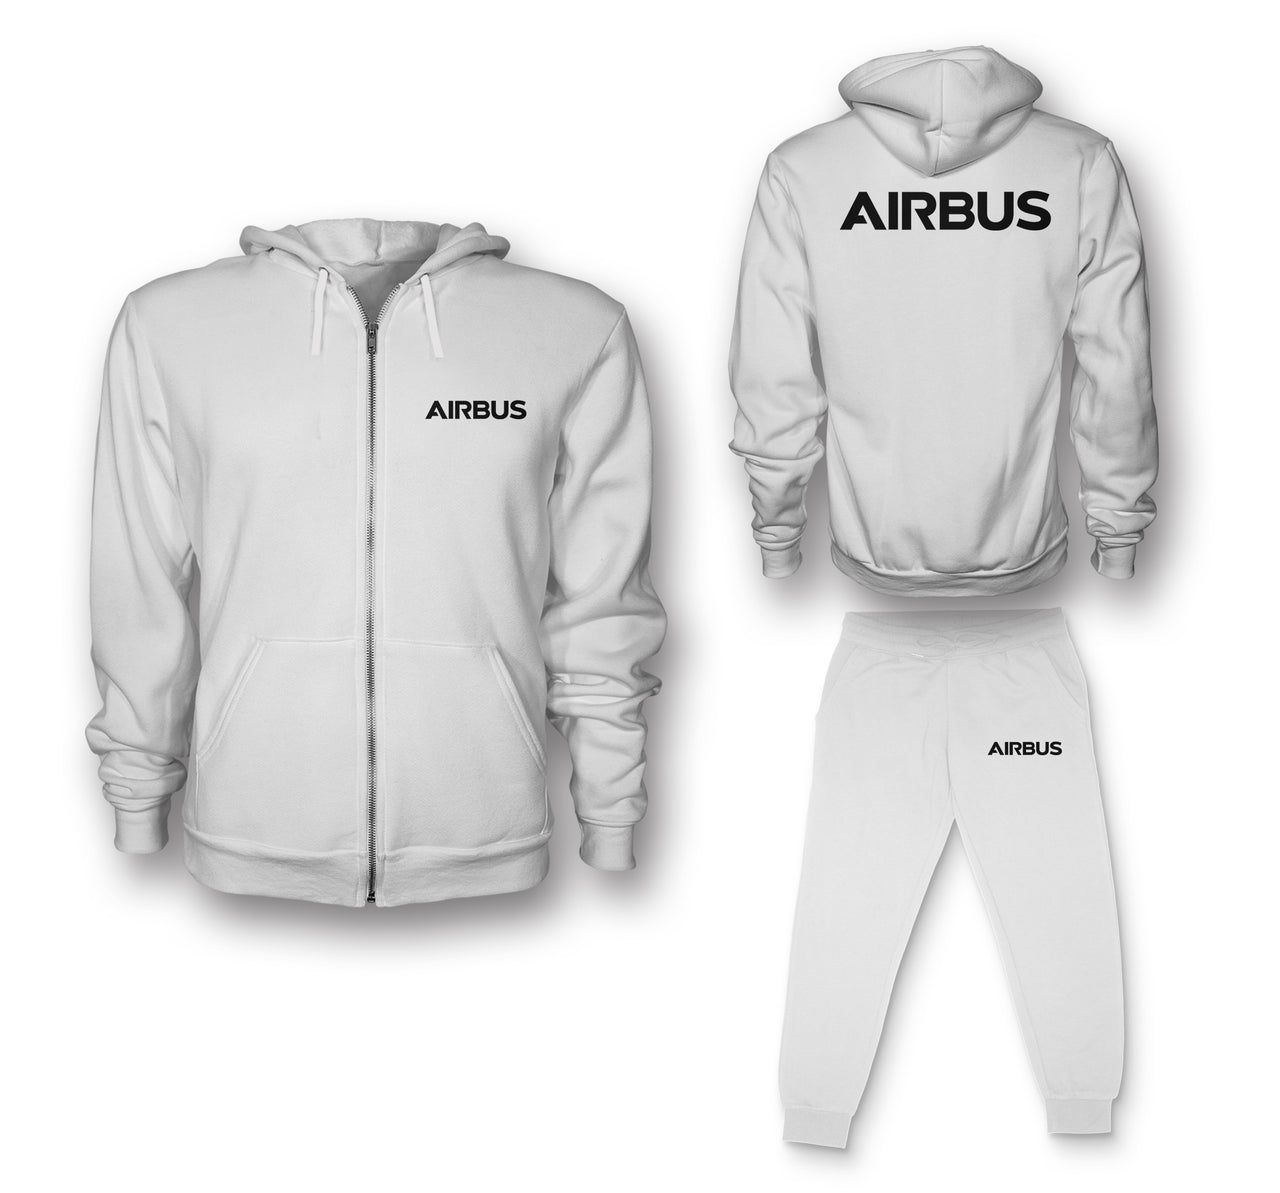 Airbus & Text Designed Zipped Hoodies & Sweatpants Set